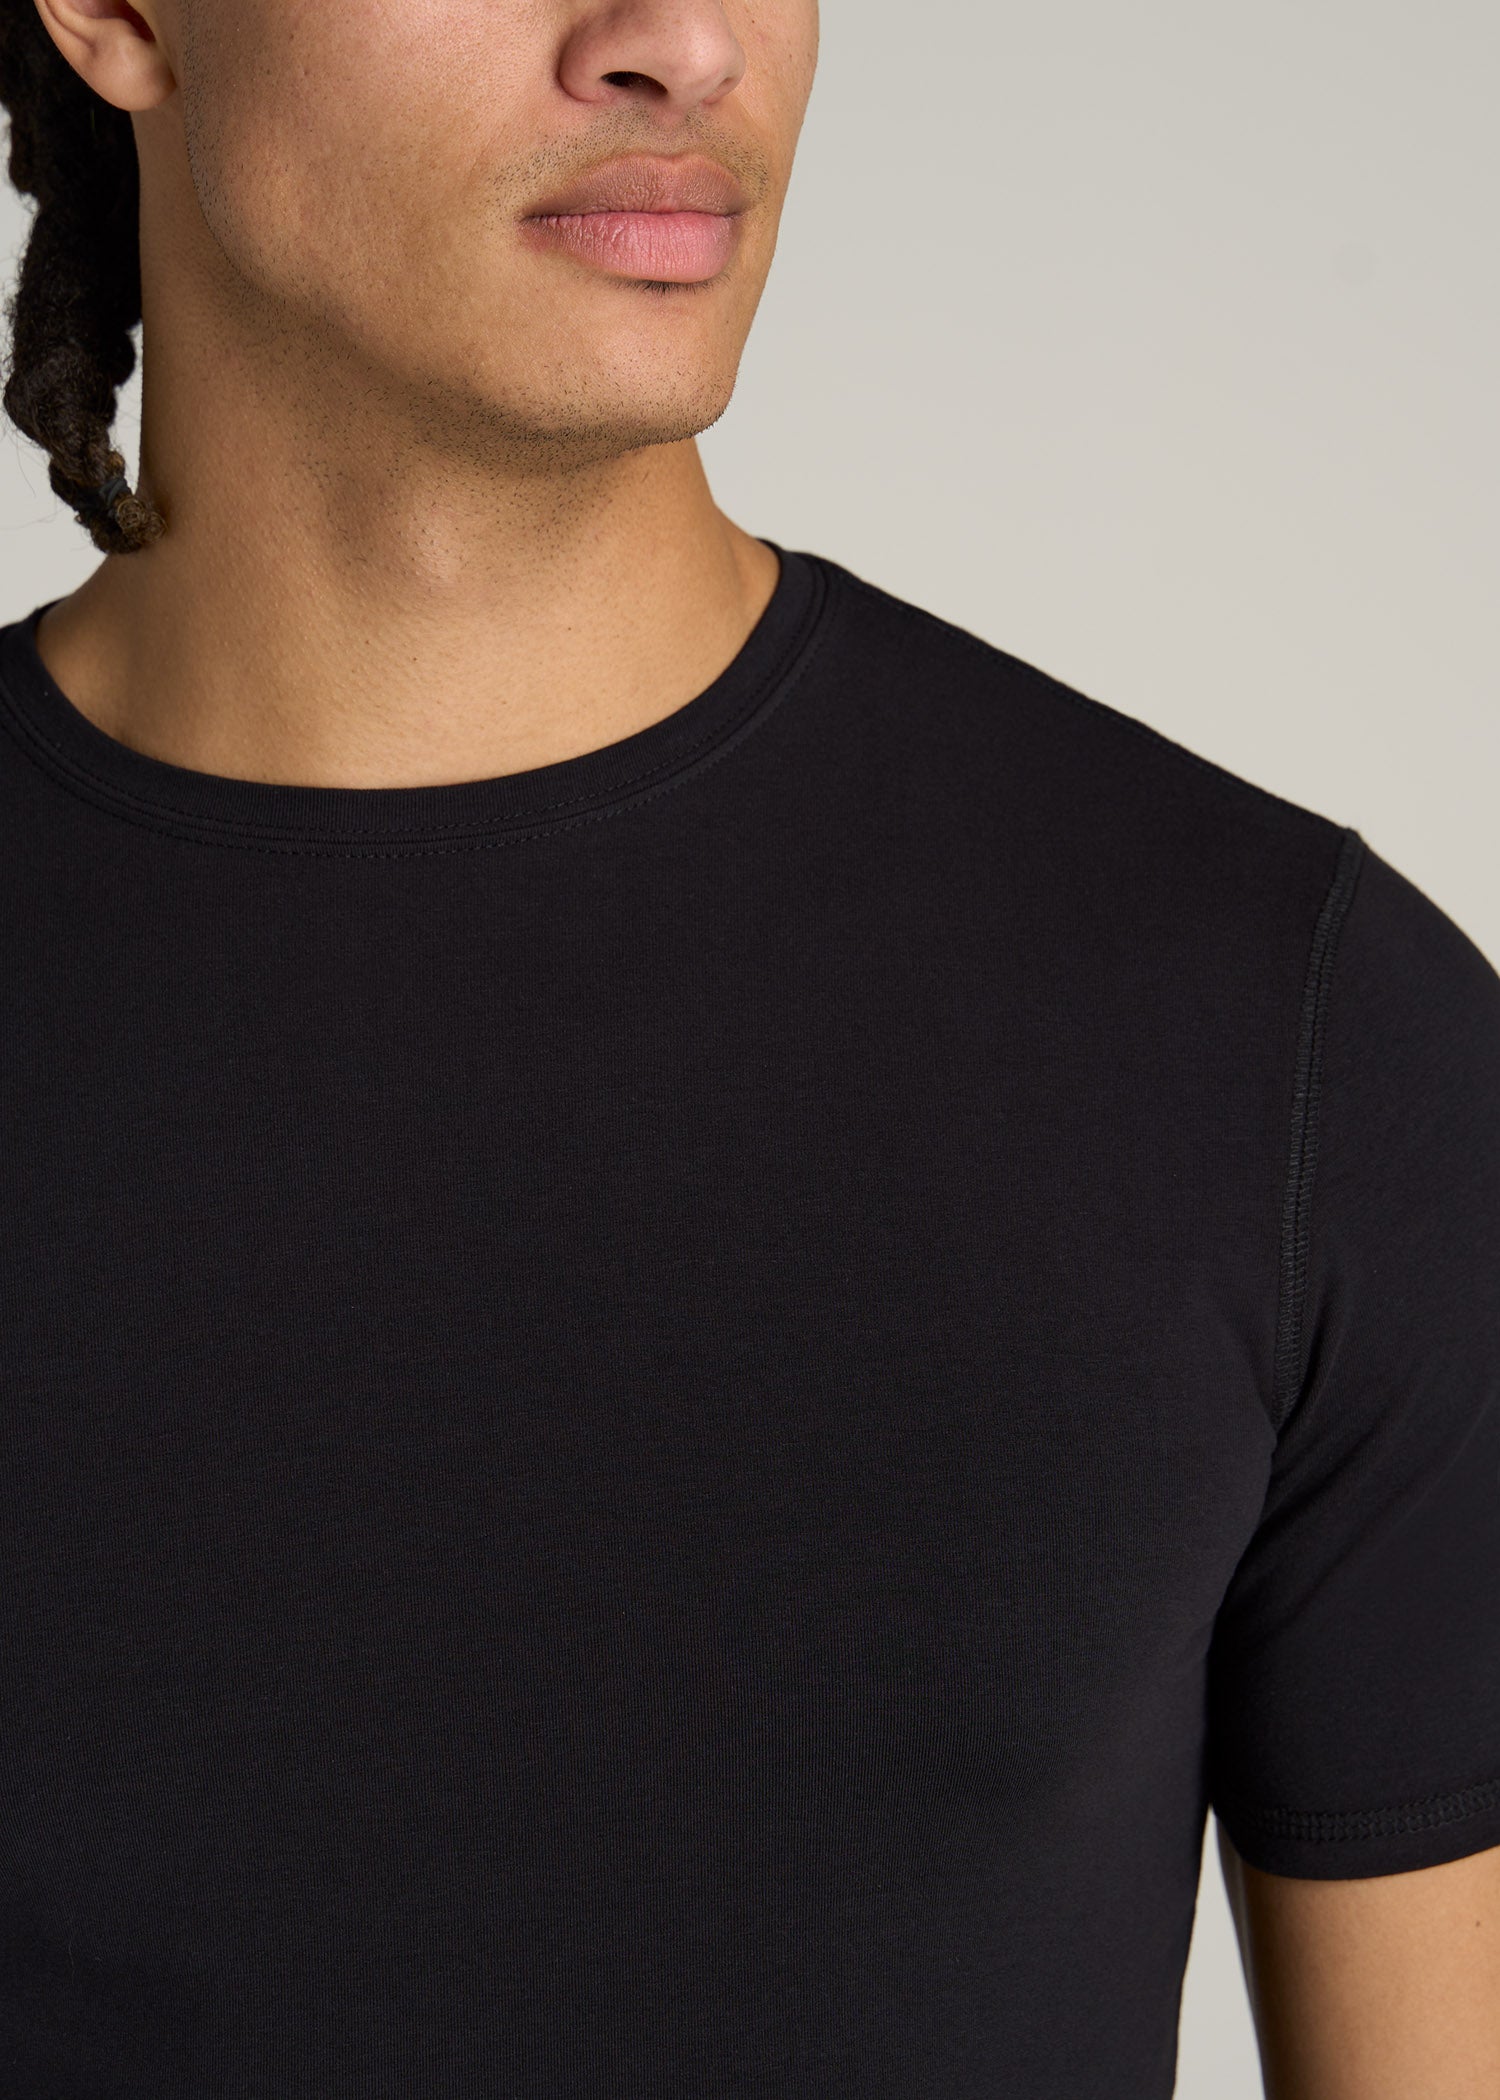 Kix Black Unisex T-Shirt - Tees - Shirts